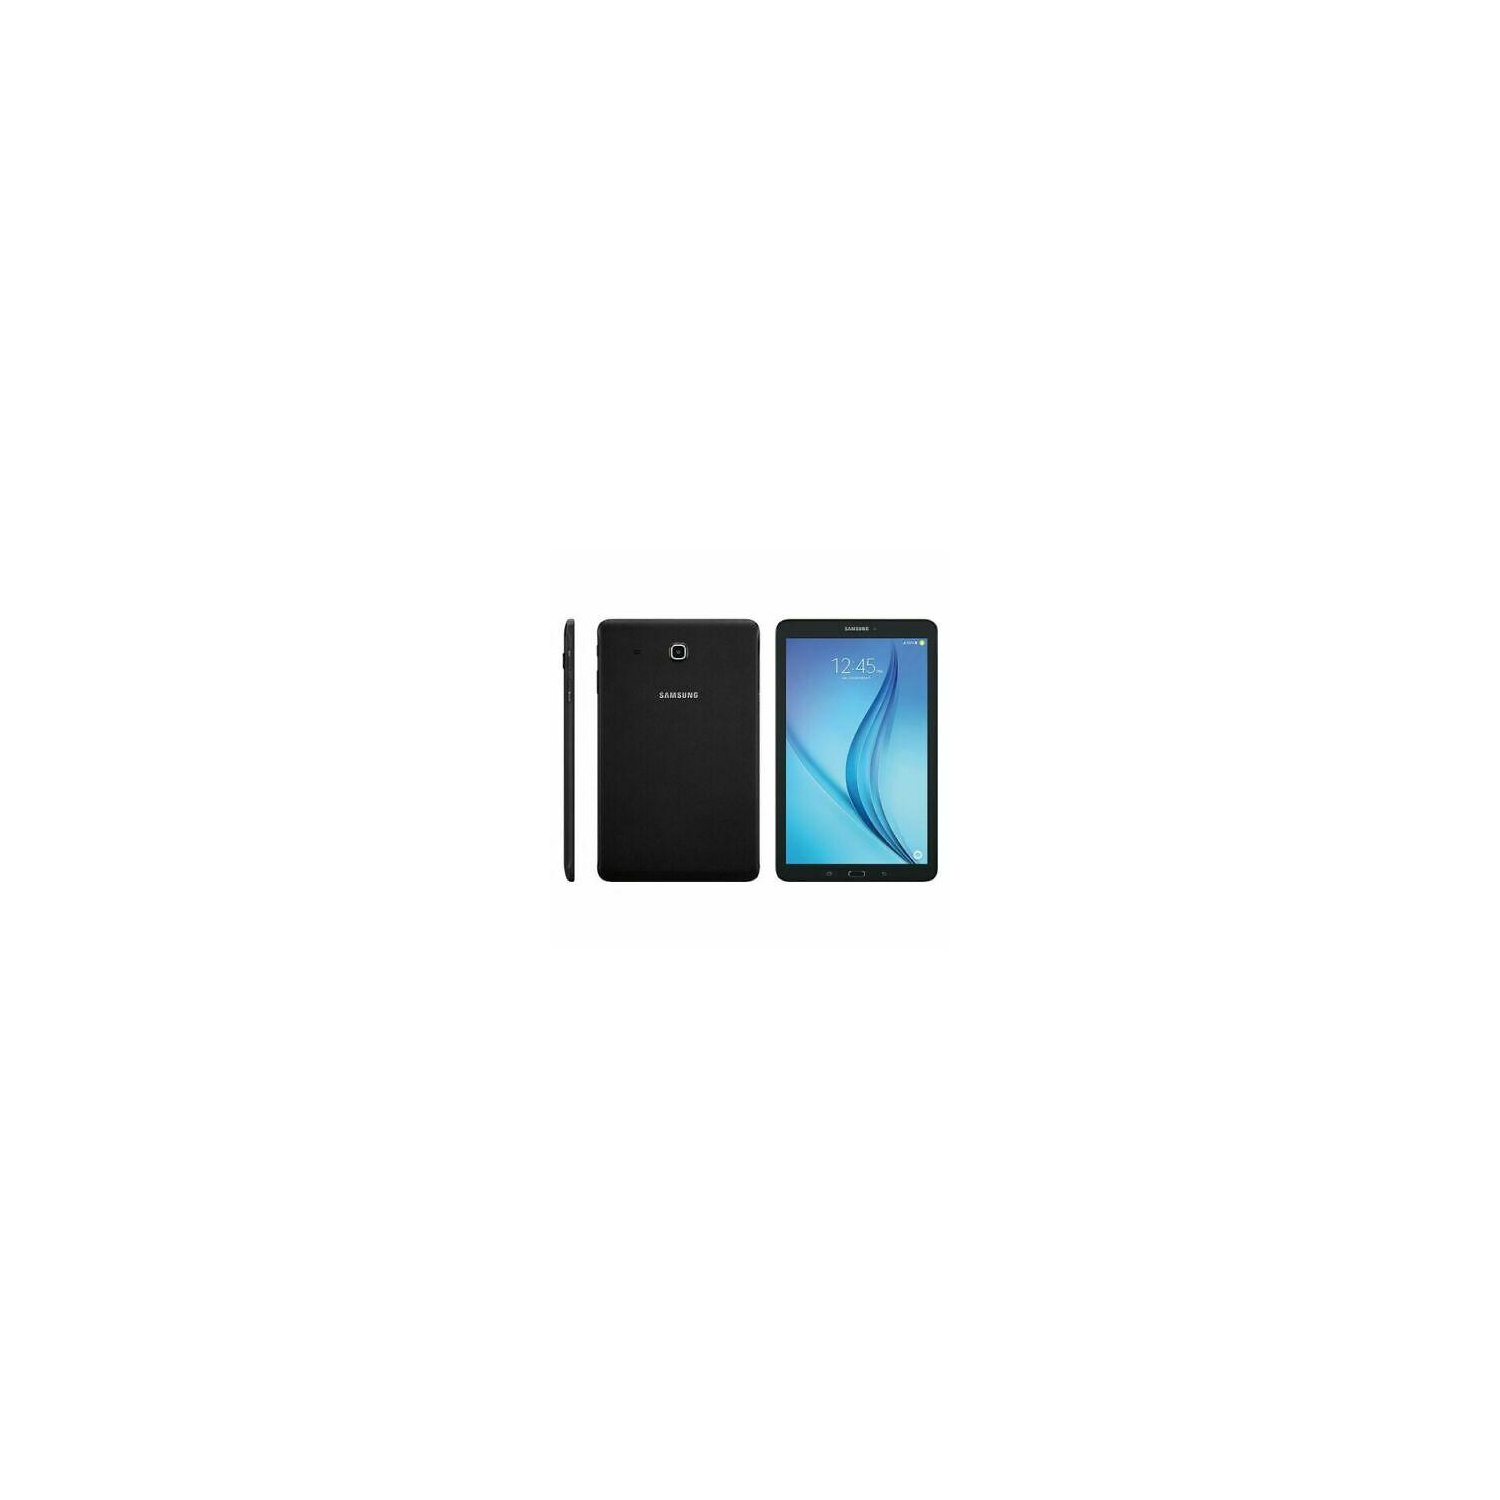 Refurbished (Good) - Samsung Galaxy Tab E SM-T377A 16GB Tablet - 8" Black